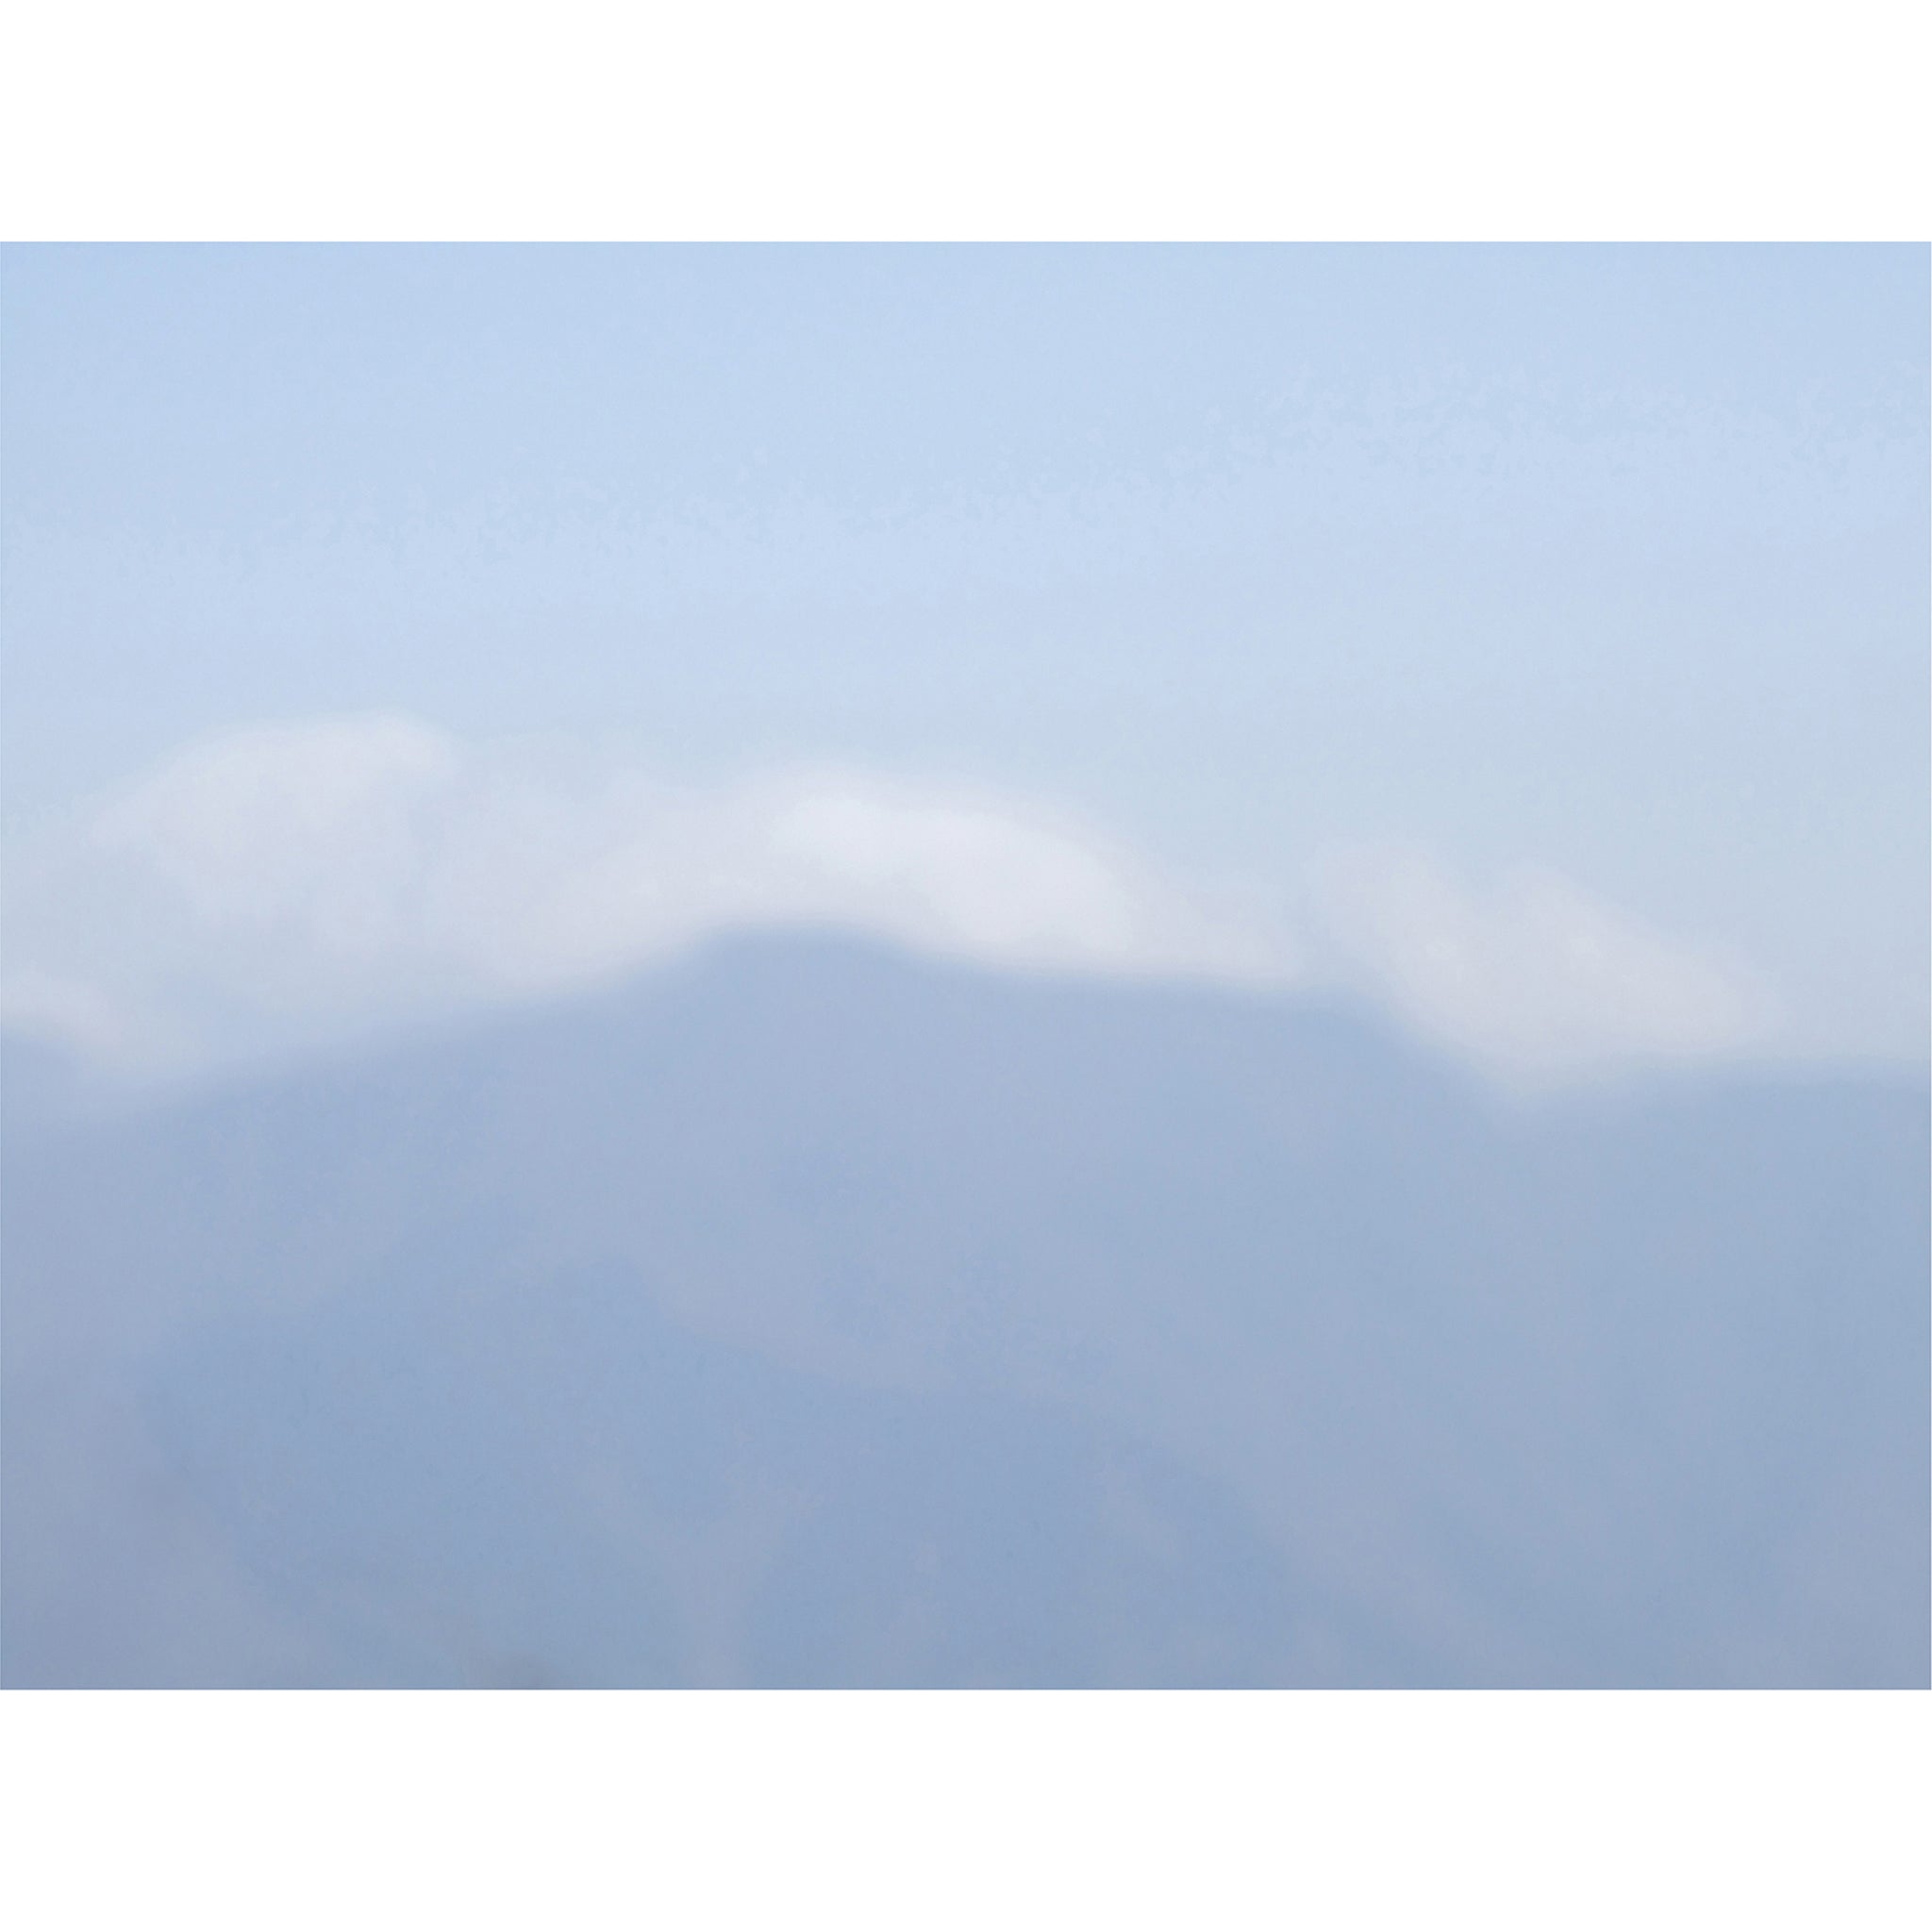 Antoinette Nausikaä<br>《Clouds on mount Fuji, Shinobu》